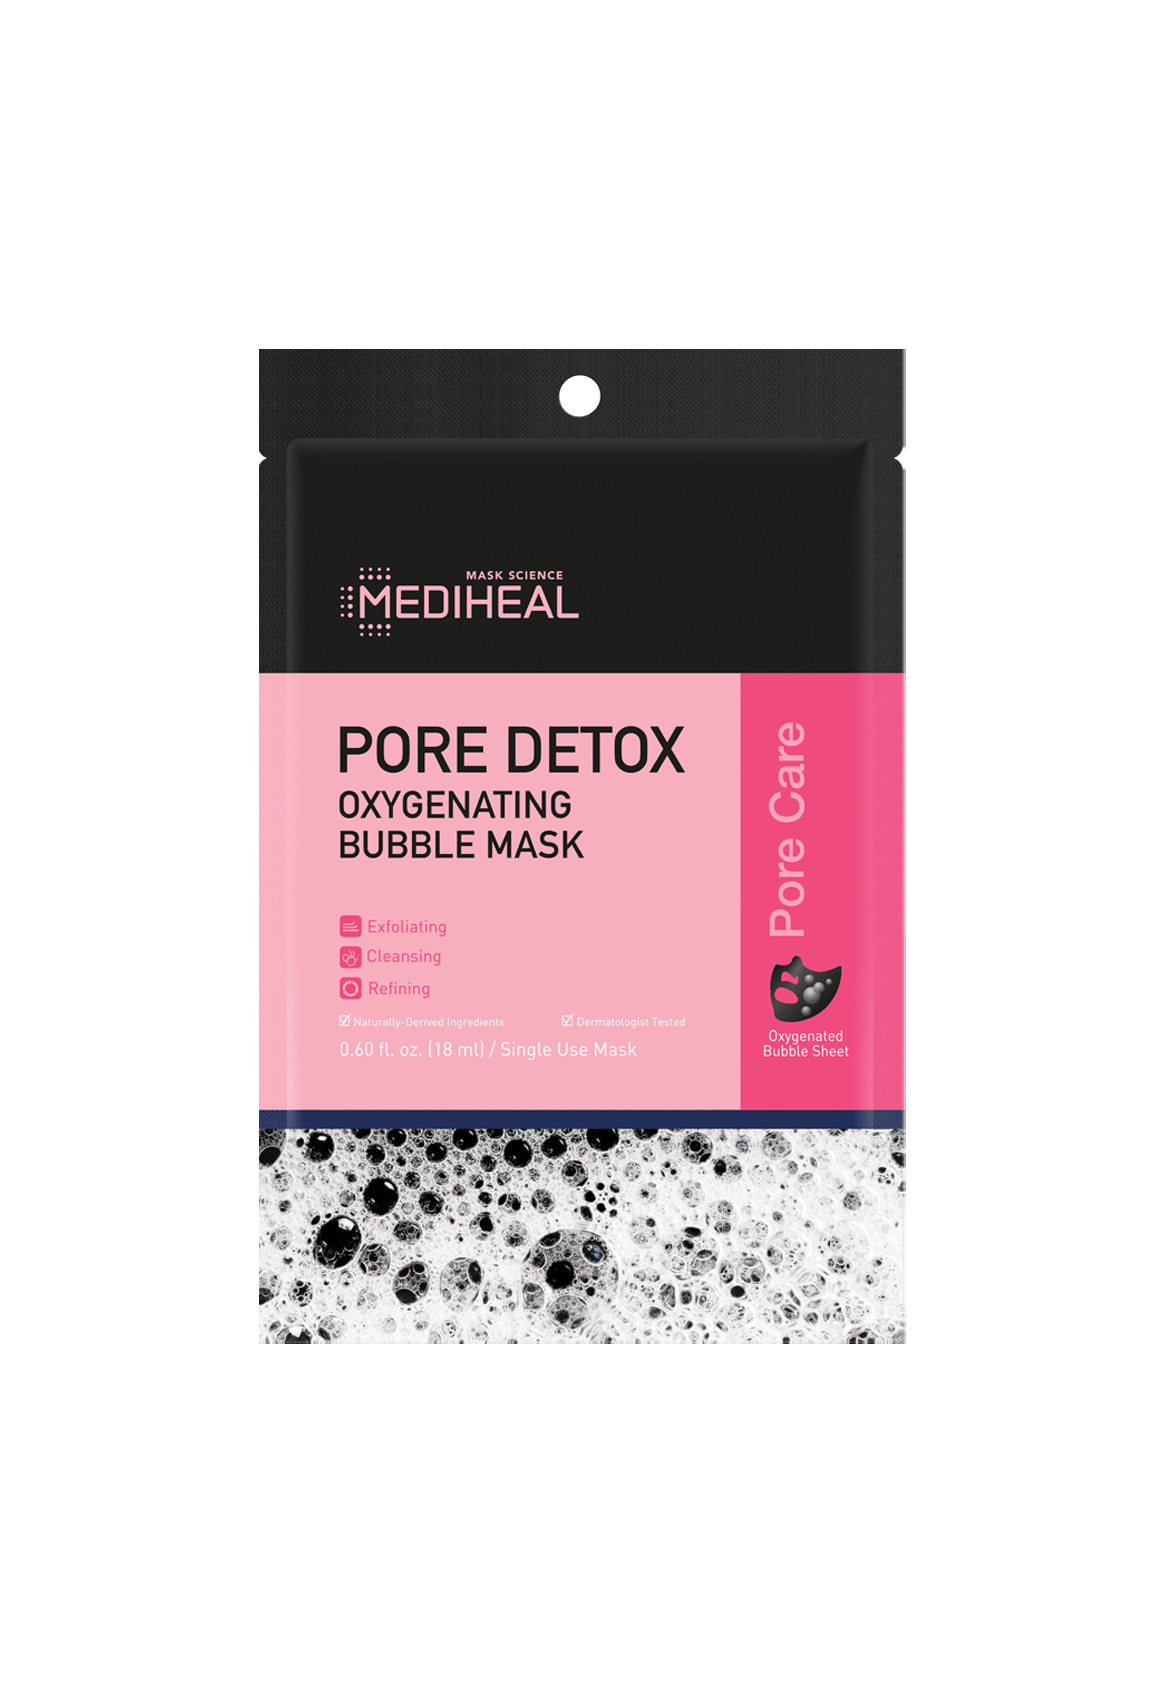 Mediheal, Pore Detox, Oxygenating Bubble Mask, 1 Sheet, (18 ml)